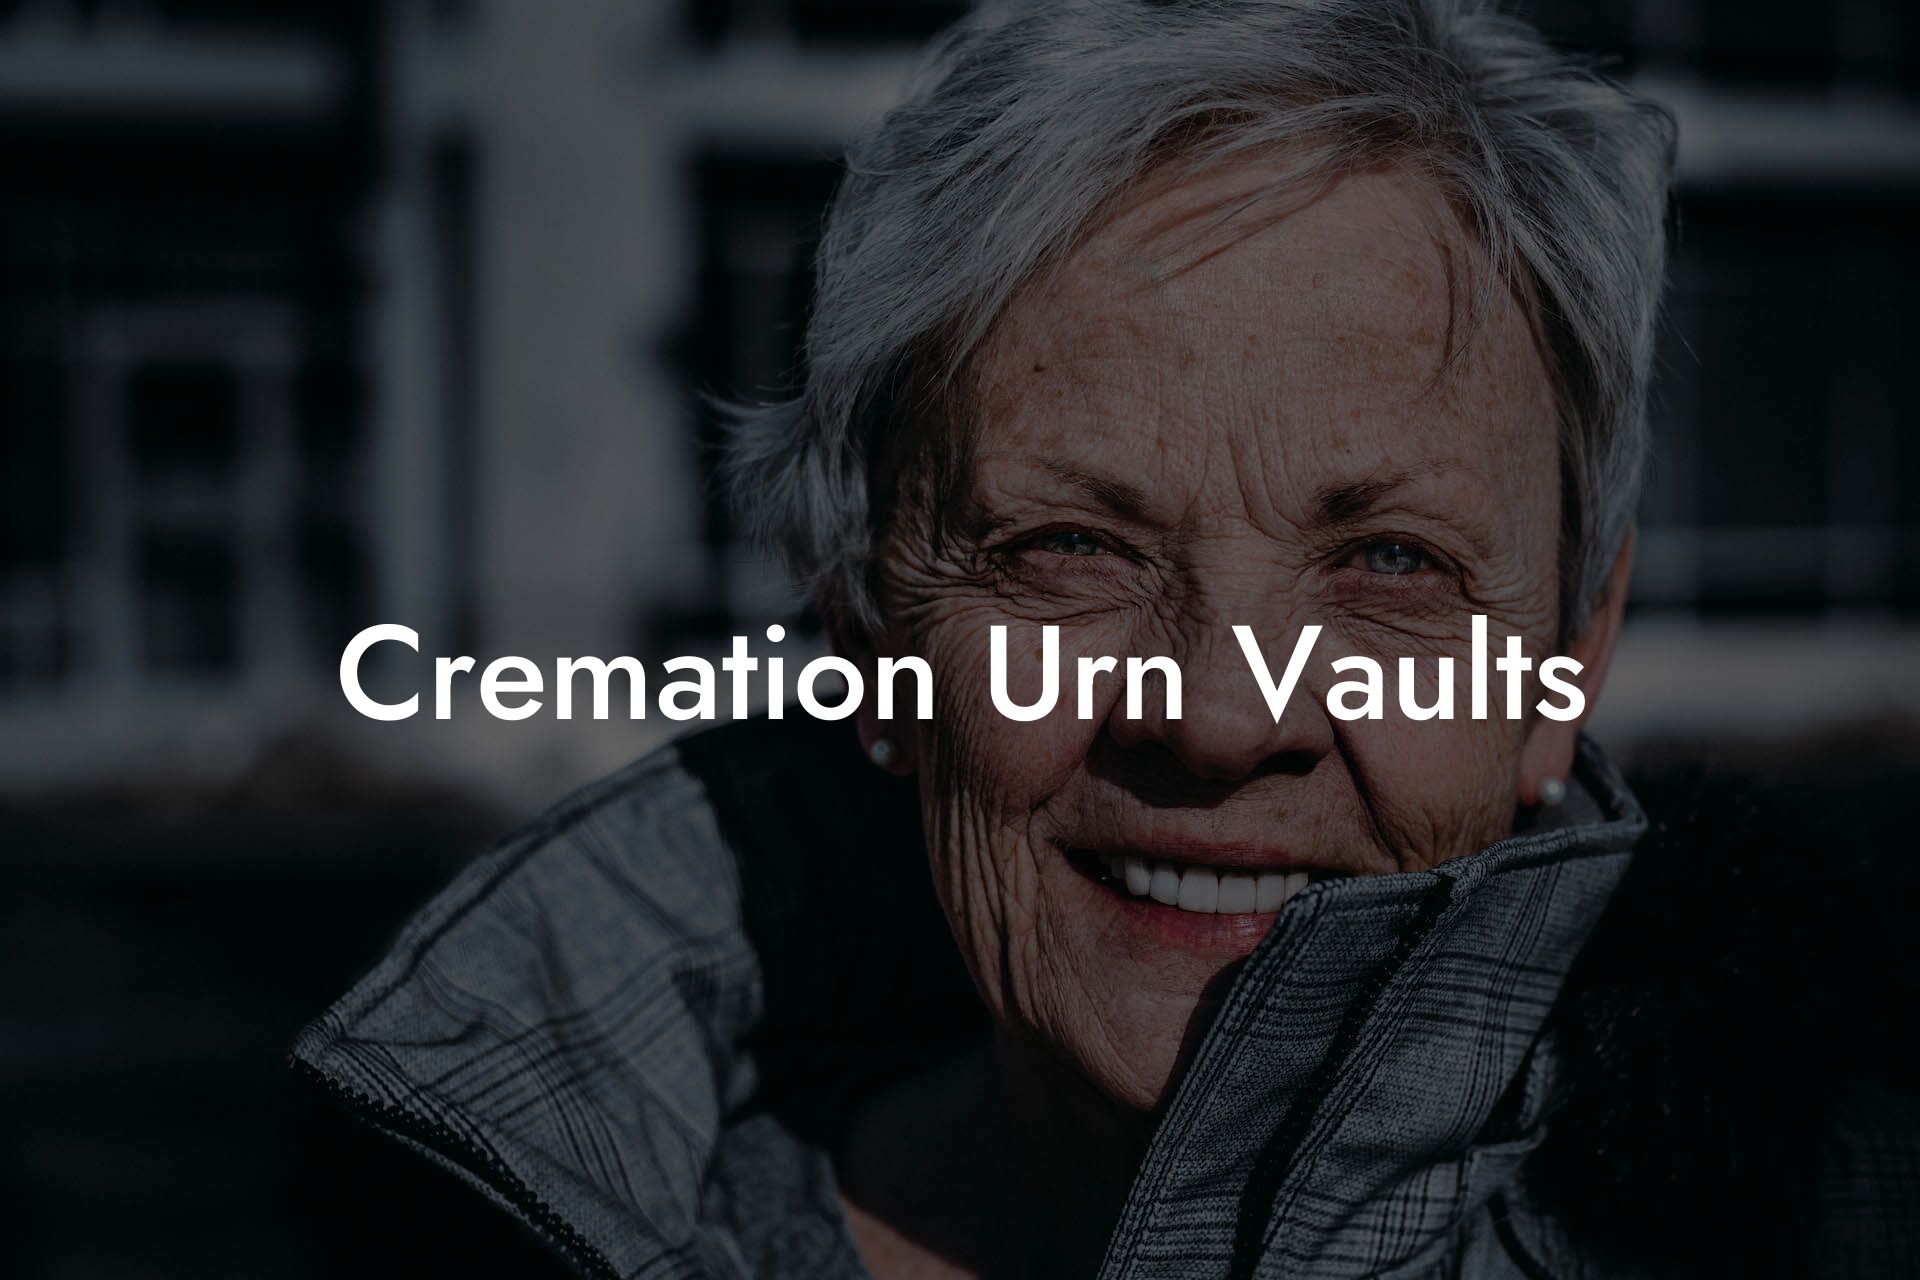 Cremation Urn Vaults